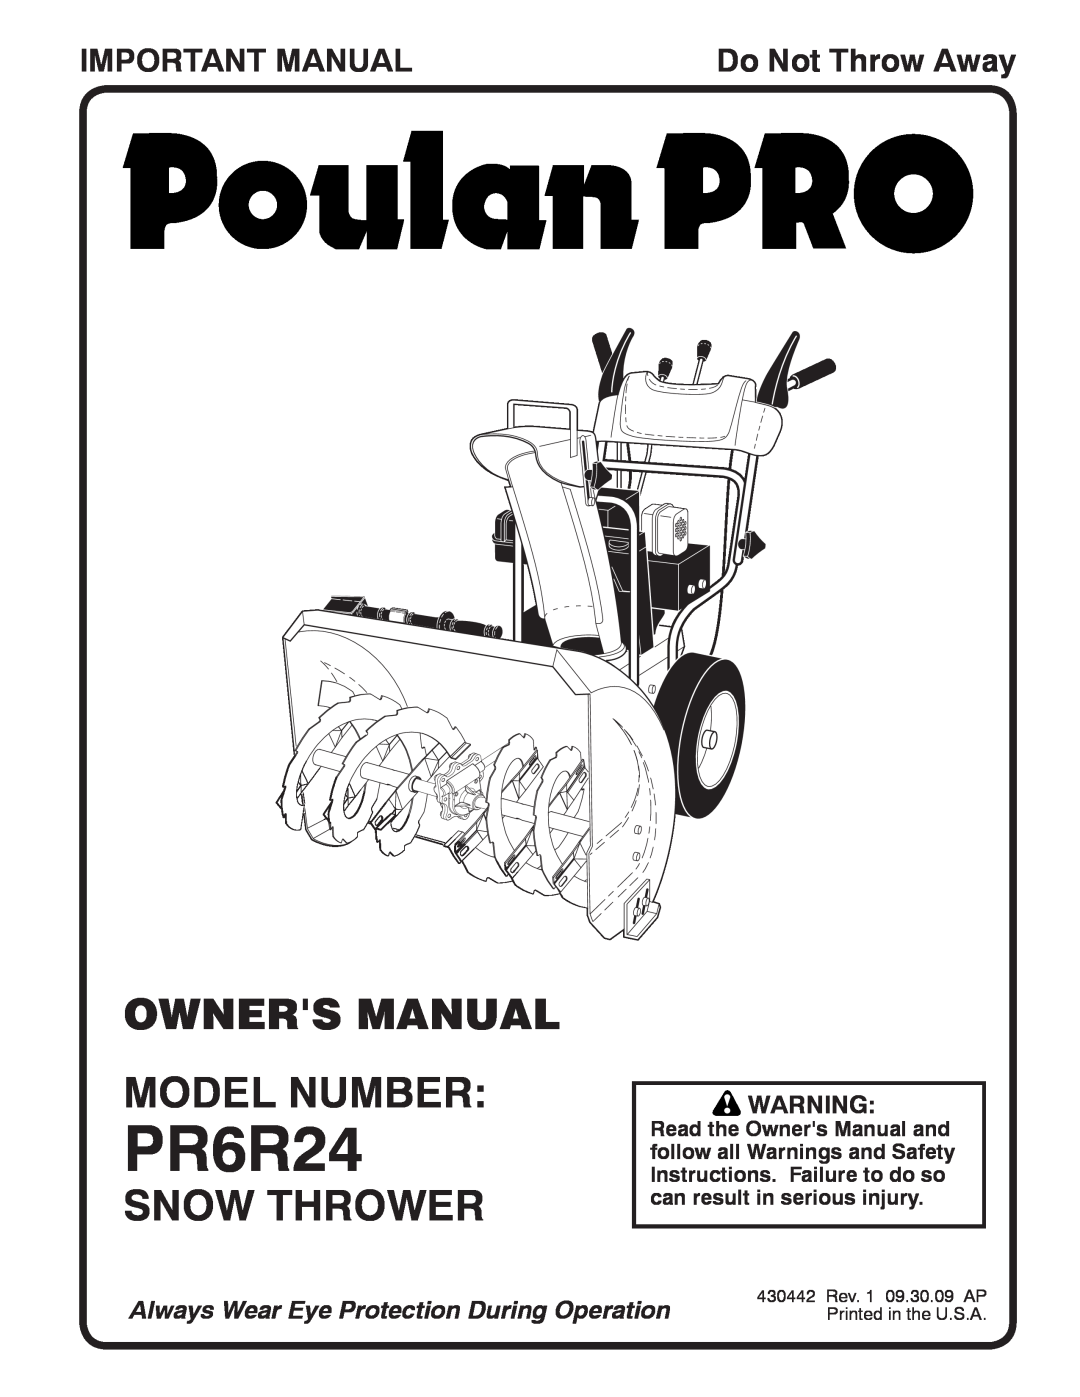 Poulan 96192002802, 430442 owner manual Snow Thrower, Important Manual, PR6R24, Do Not Throw Away 